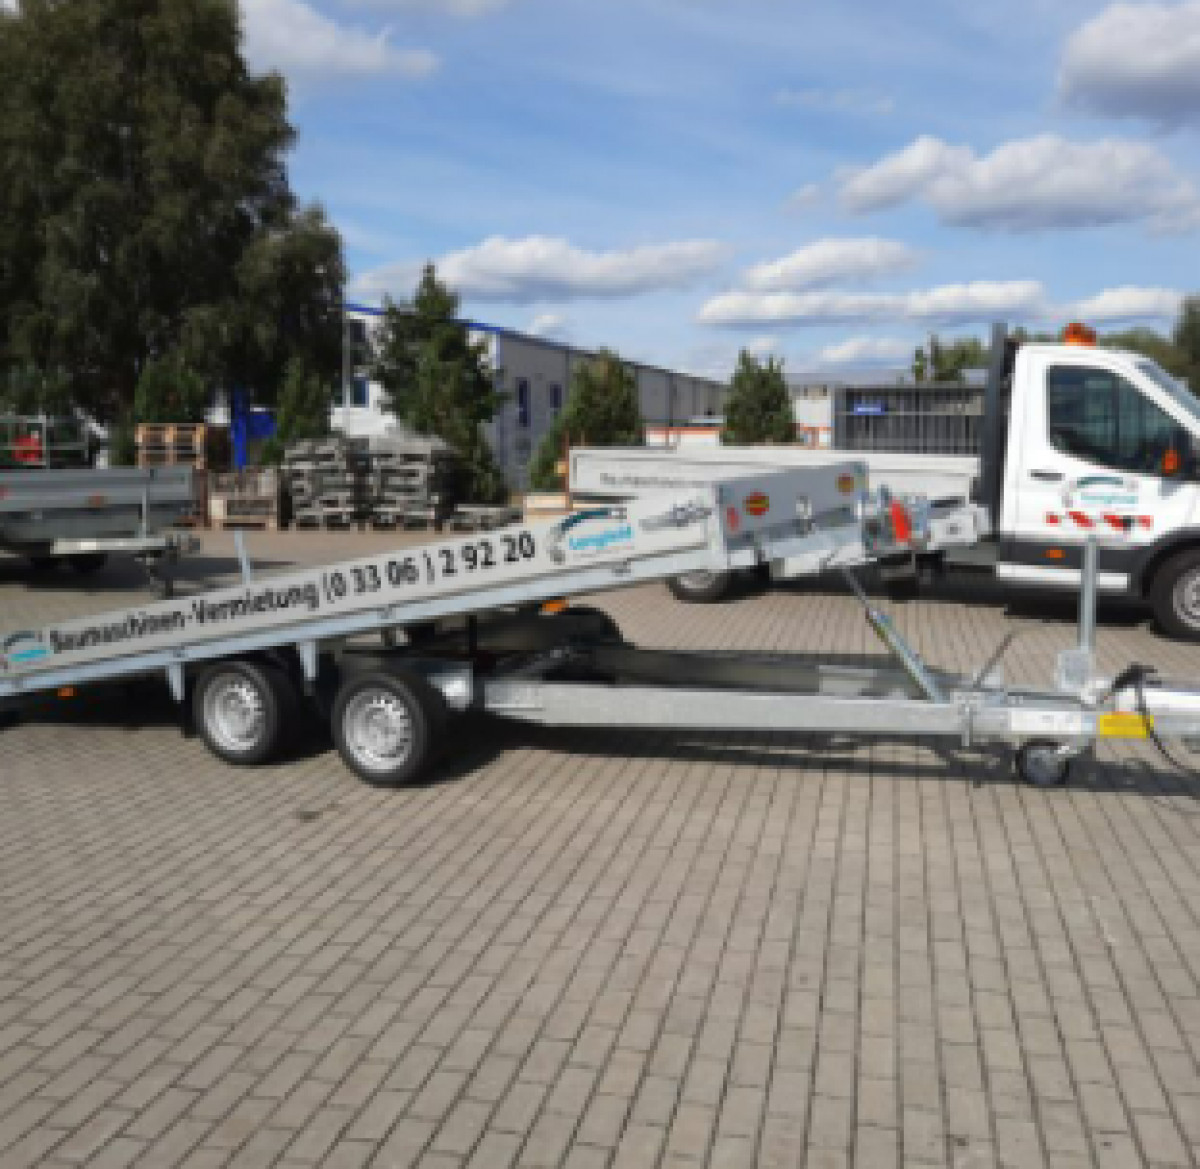 Auto Trailer Autotransporter 6 x 2 m Bauwagen Transport mieten in